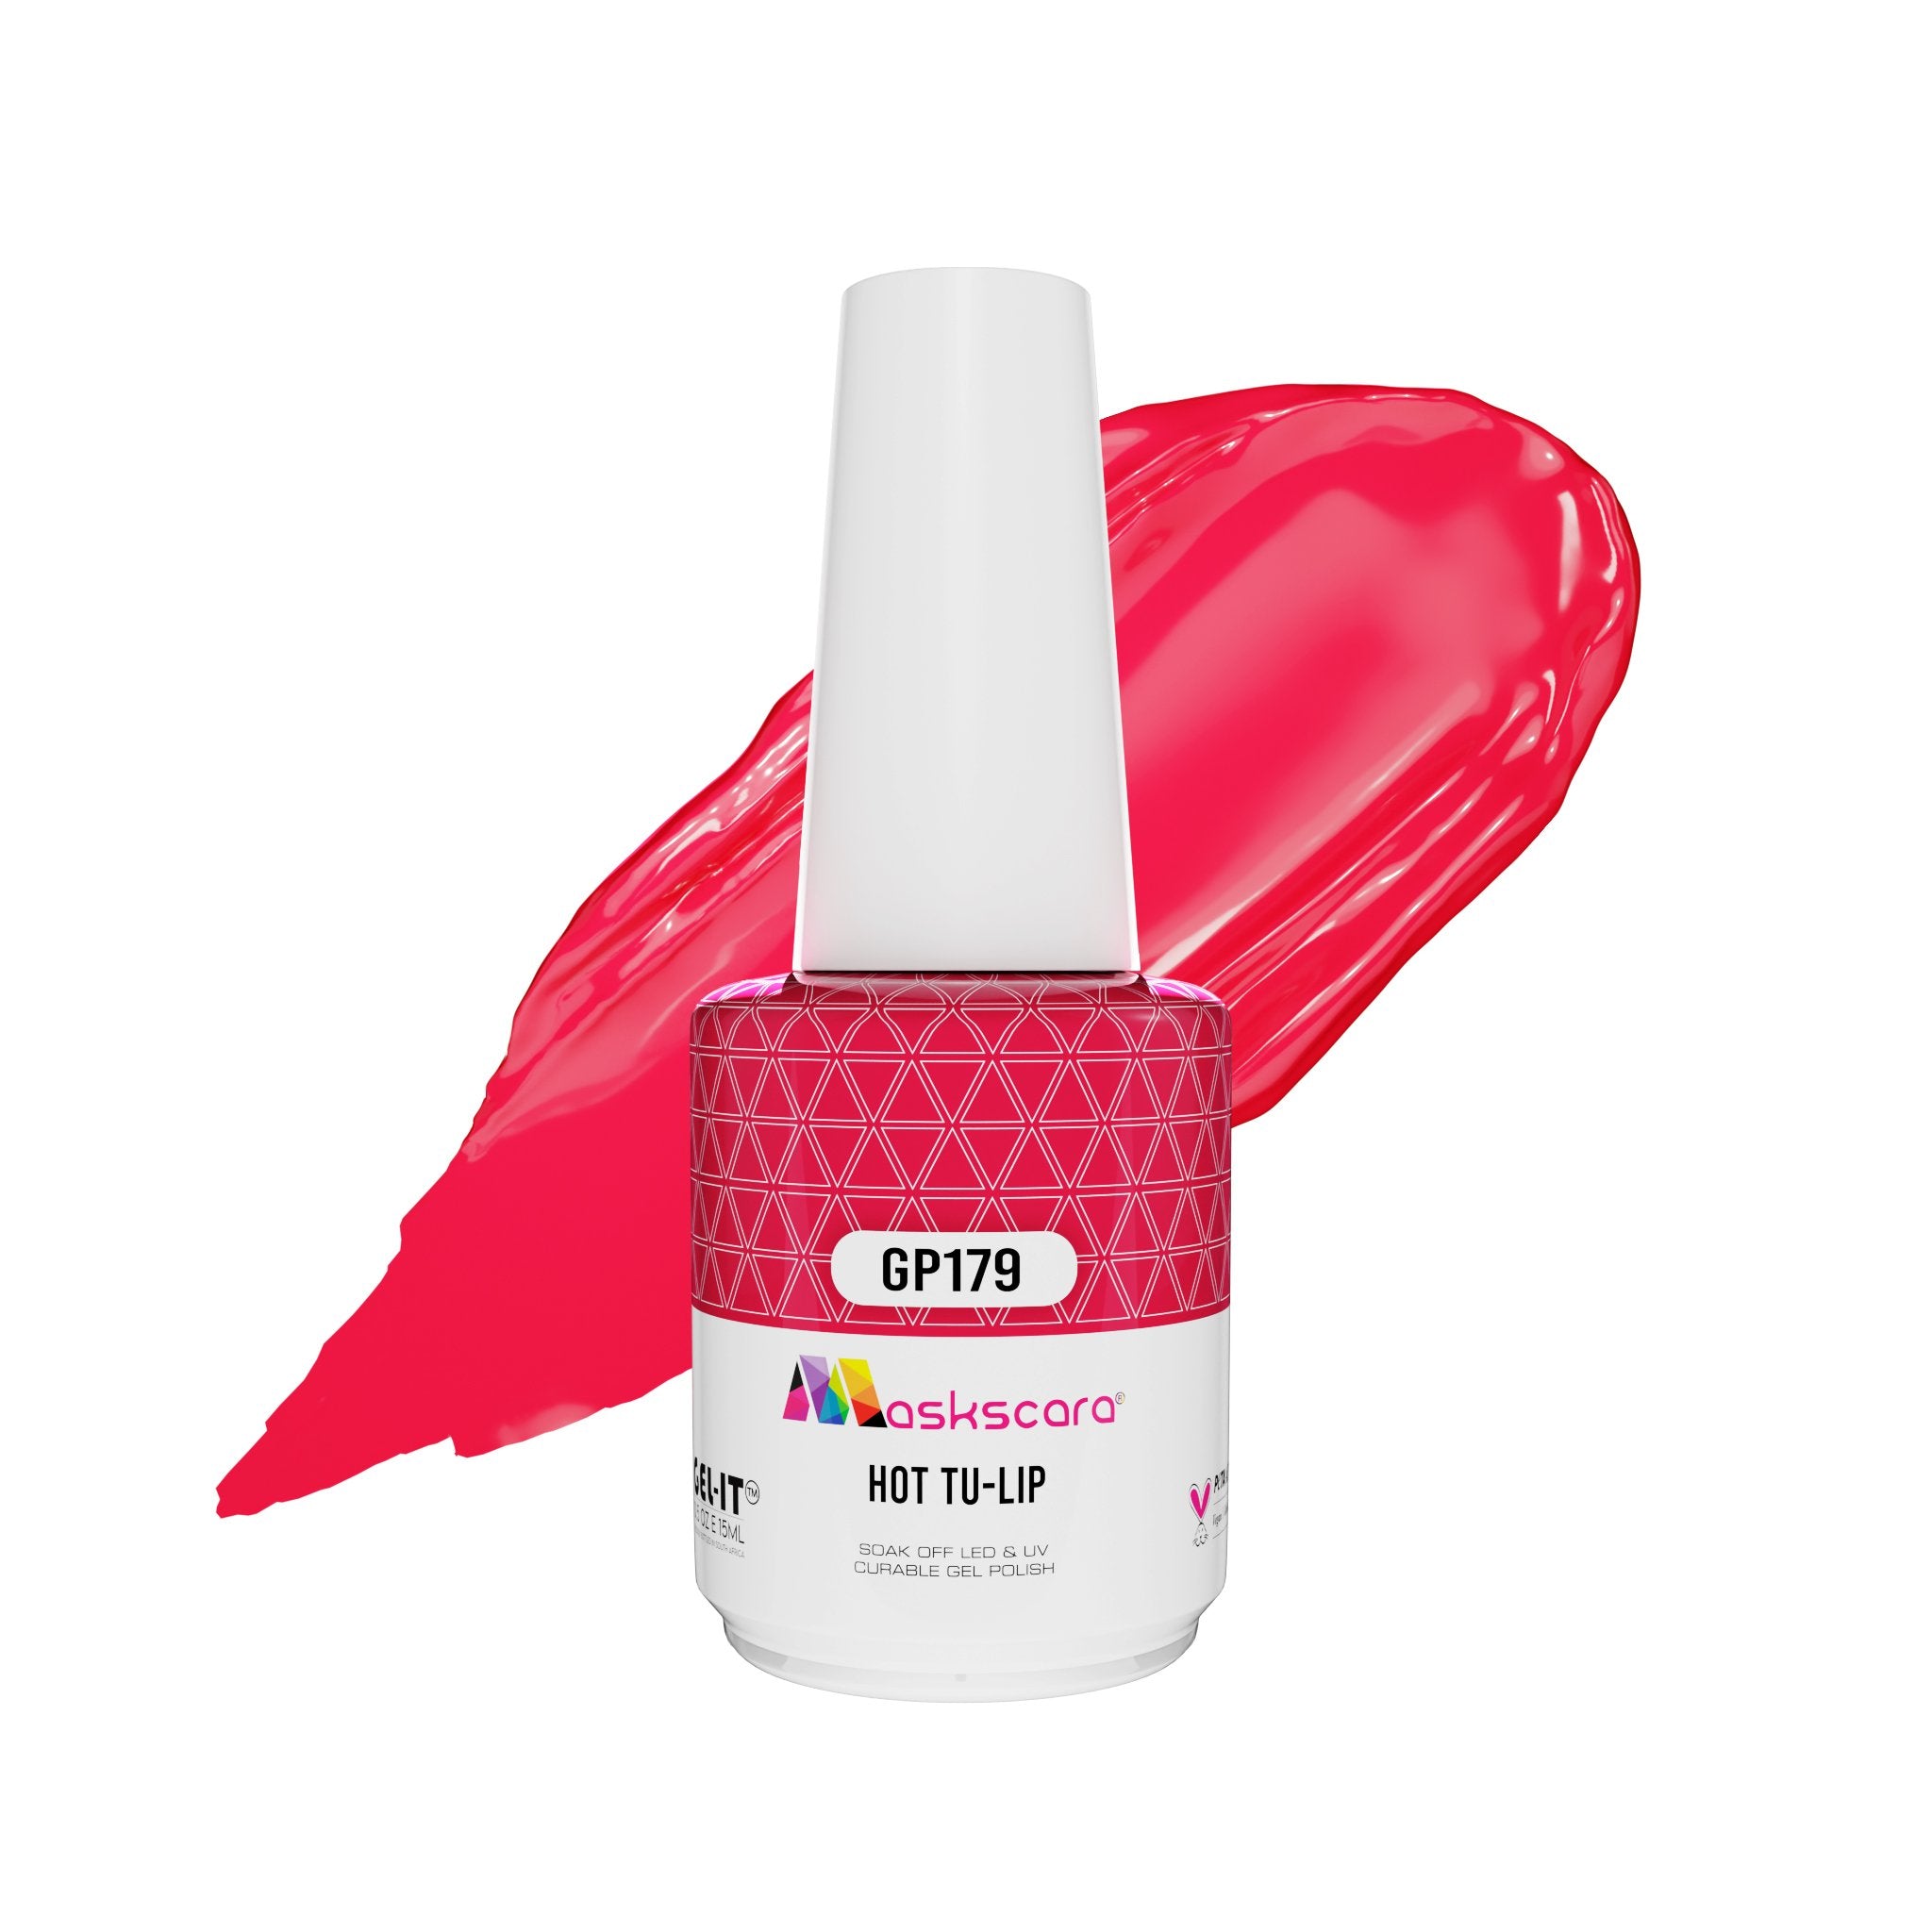 <img scr = “ GP179 Hot Tu-Lip.jpeg” alt = “Bright Watermelon Pink gel polish colour by the brand Maskscara”>